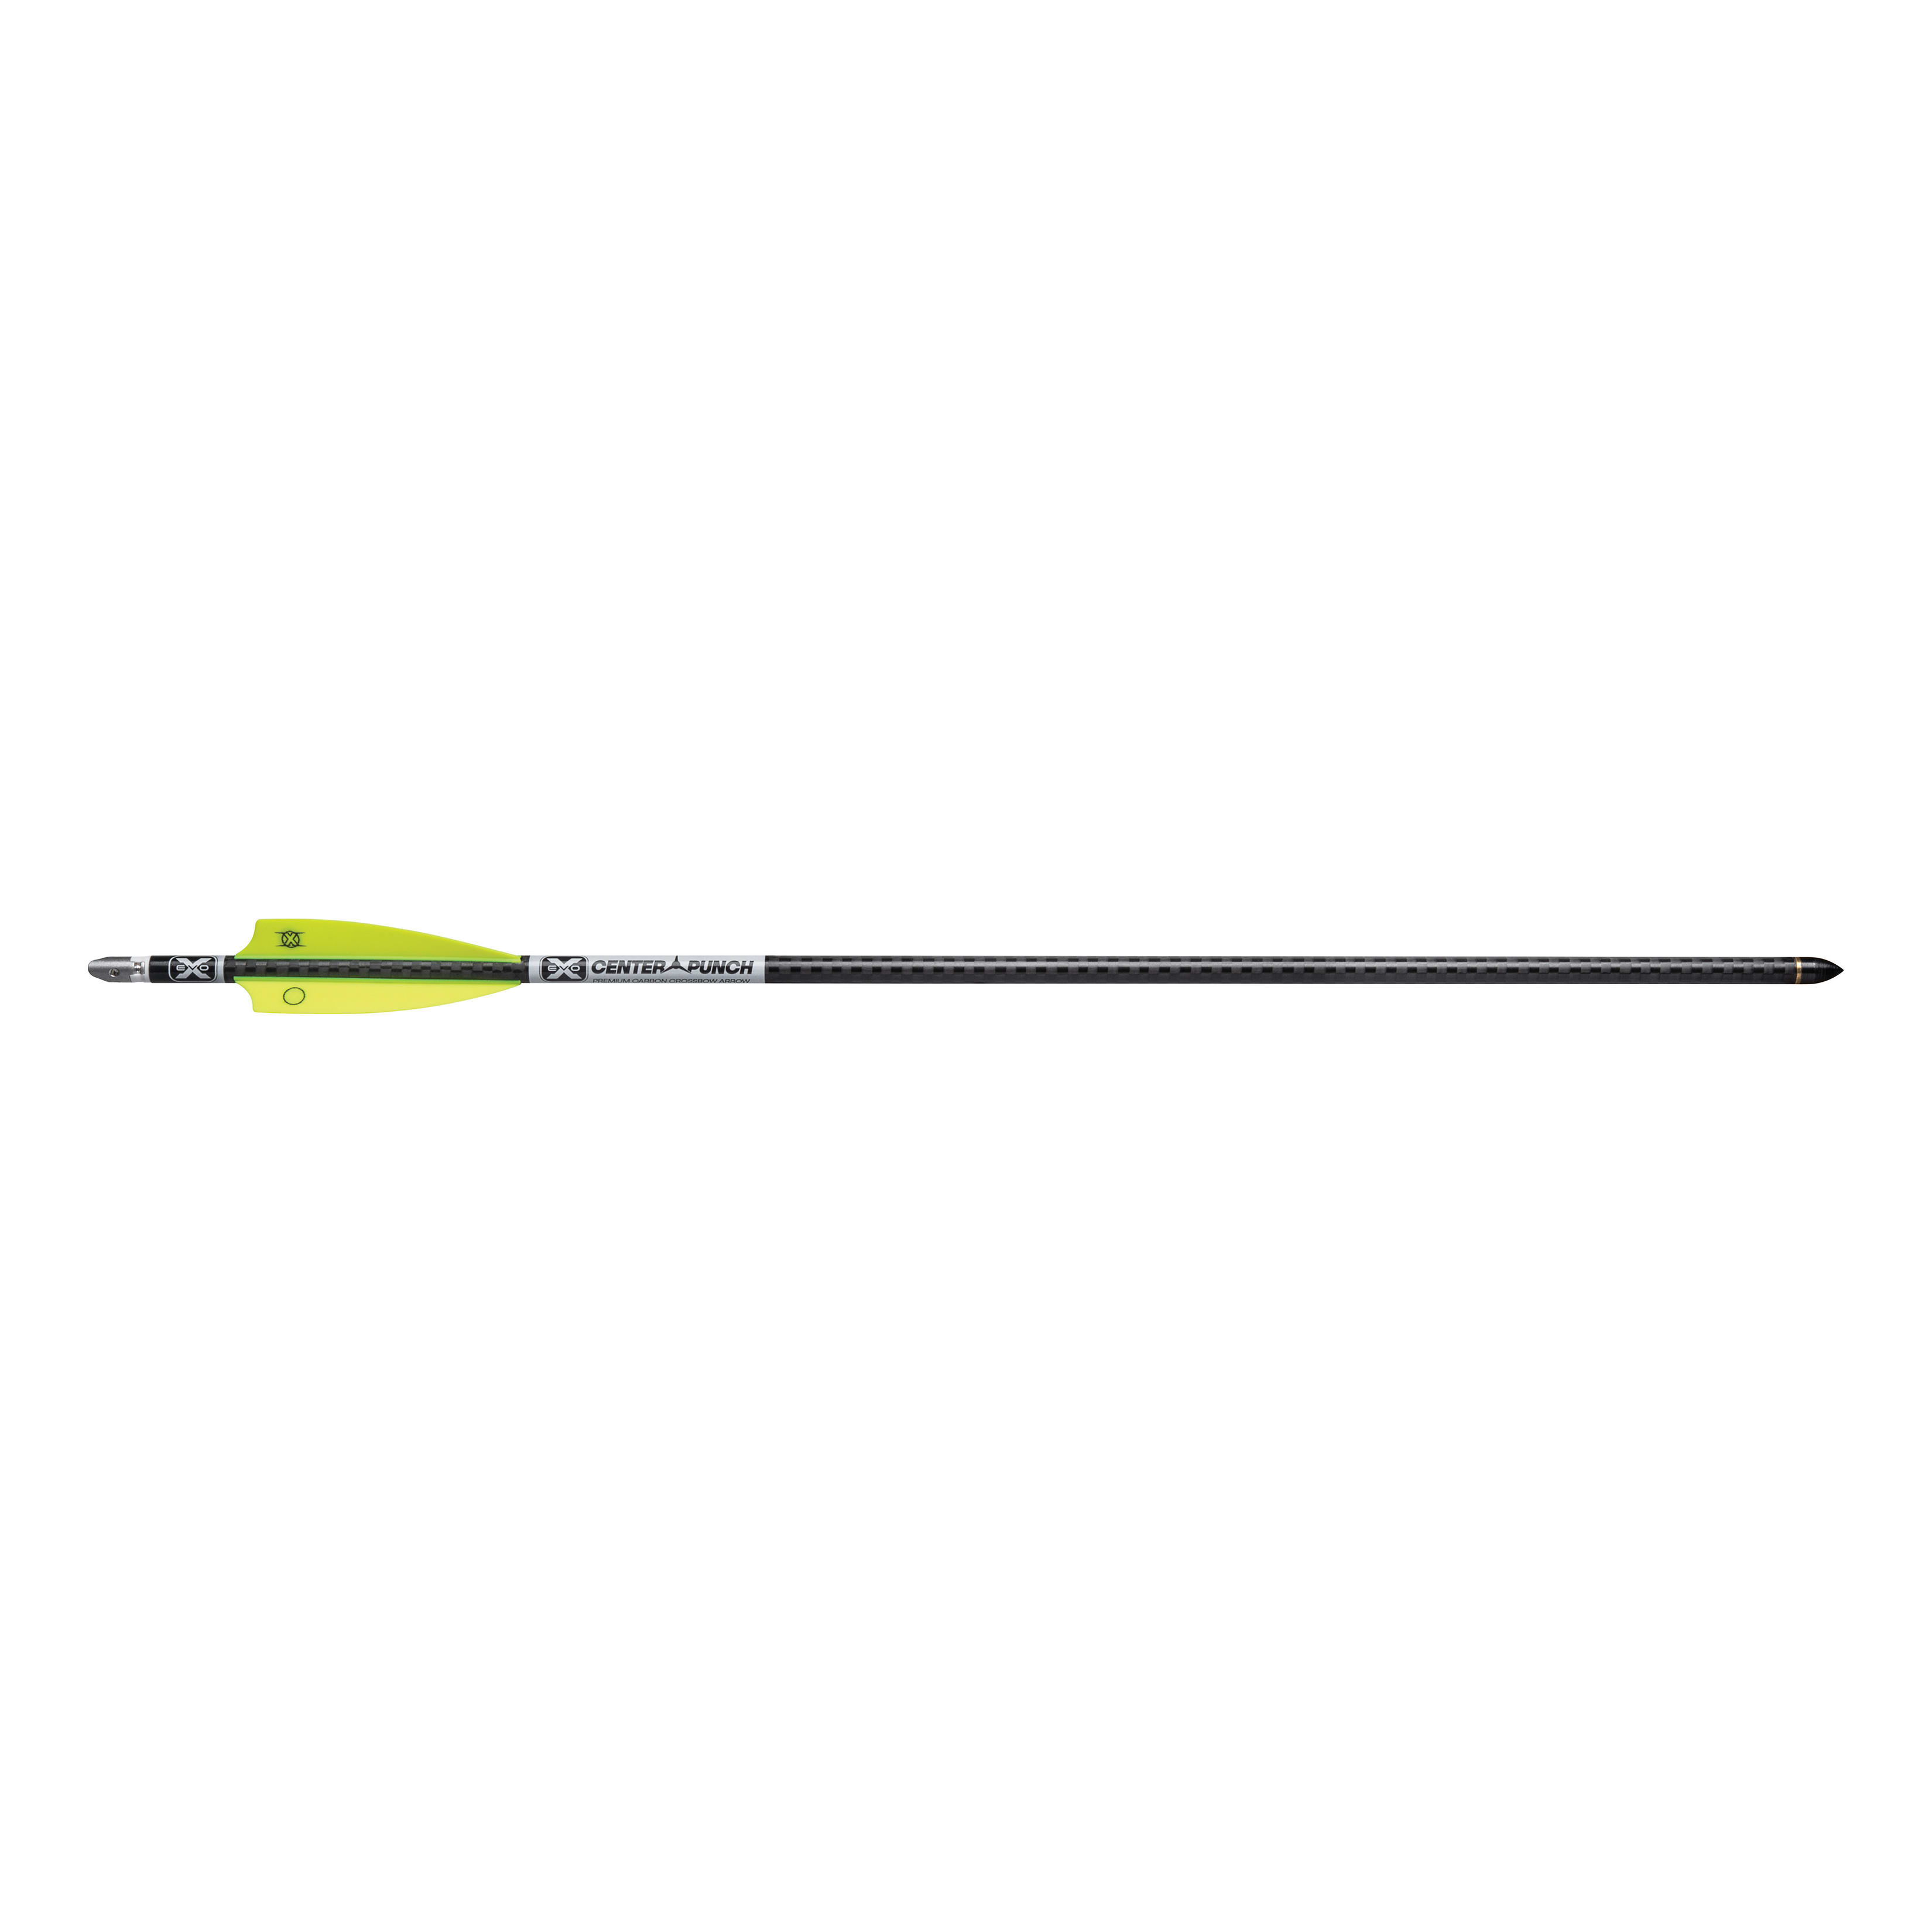 Evo-X Centerpunch Premium Carbon Crossbow Arrows – 6-Pack